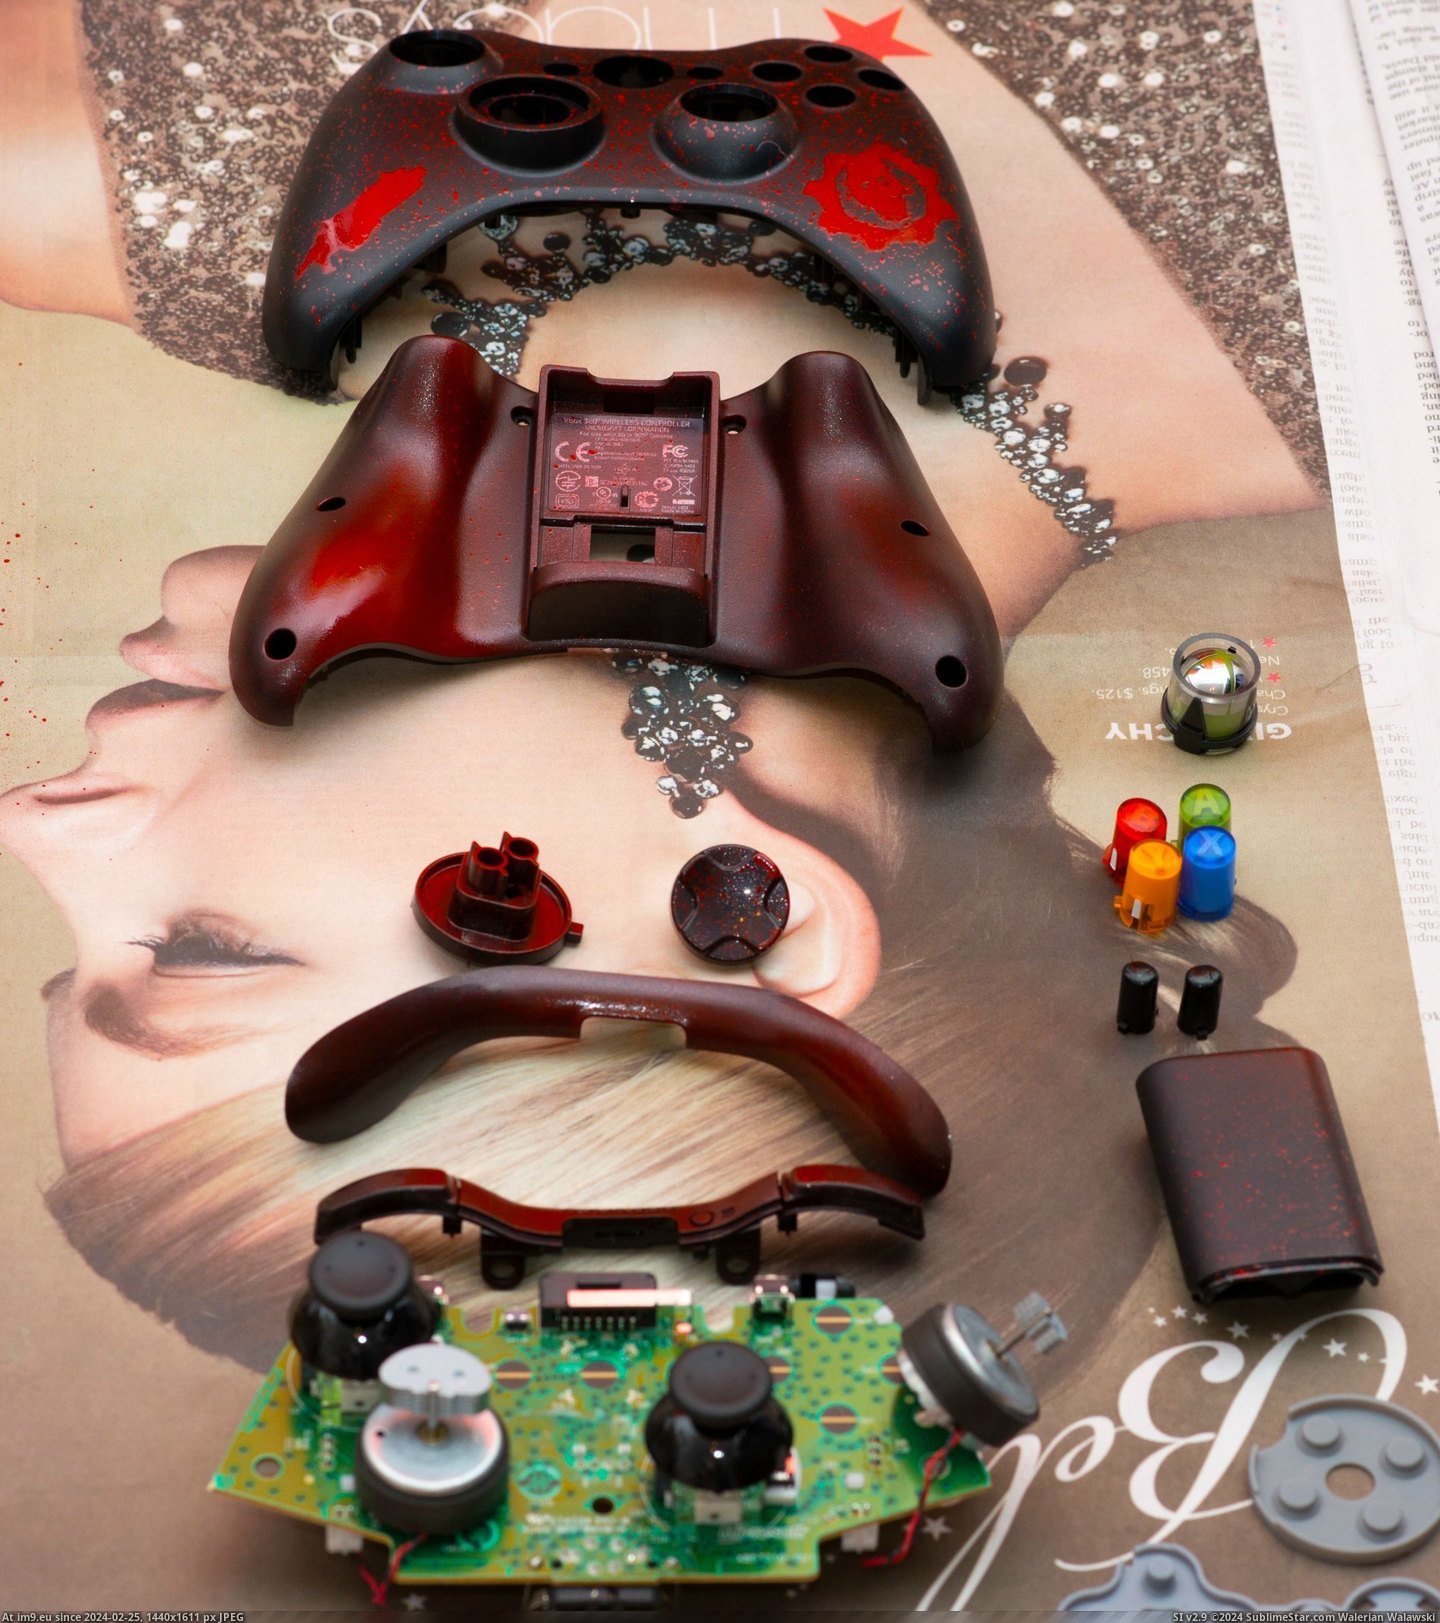 #Gaming #One #War #Controller #Redditor #Gears #Lucky #Painted #Xbox [Gaming] One lucky redditor is getting a custom painted Gears of War Xbox 360 controller! 1 Pic. (Изображение из альбом My r/GAMING favs))